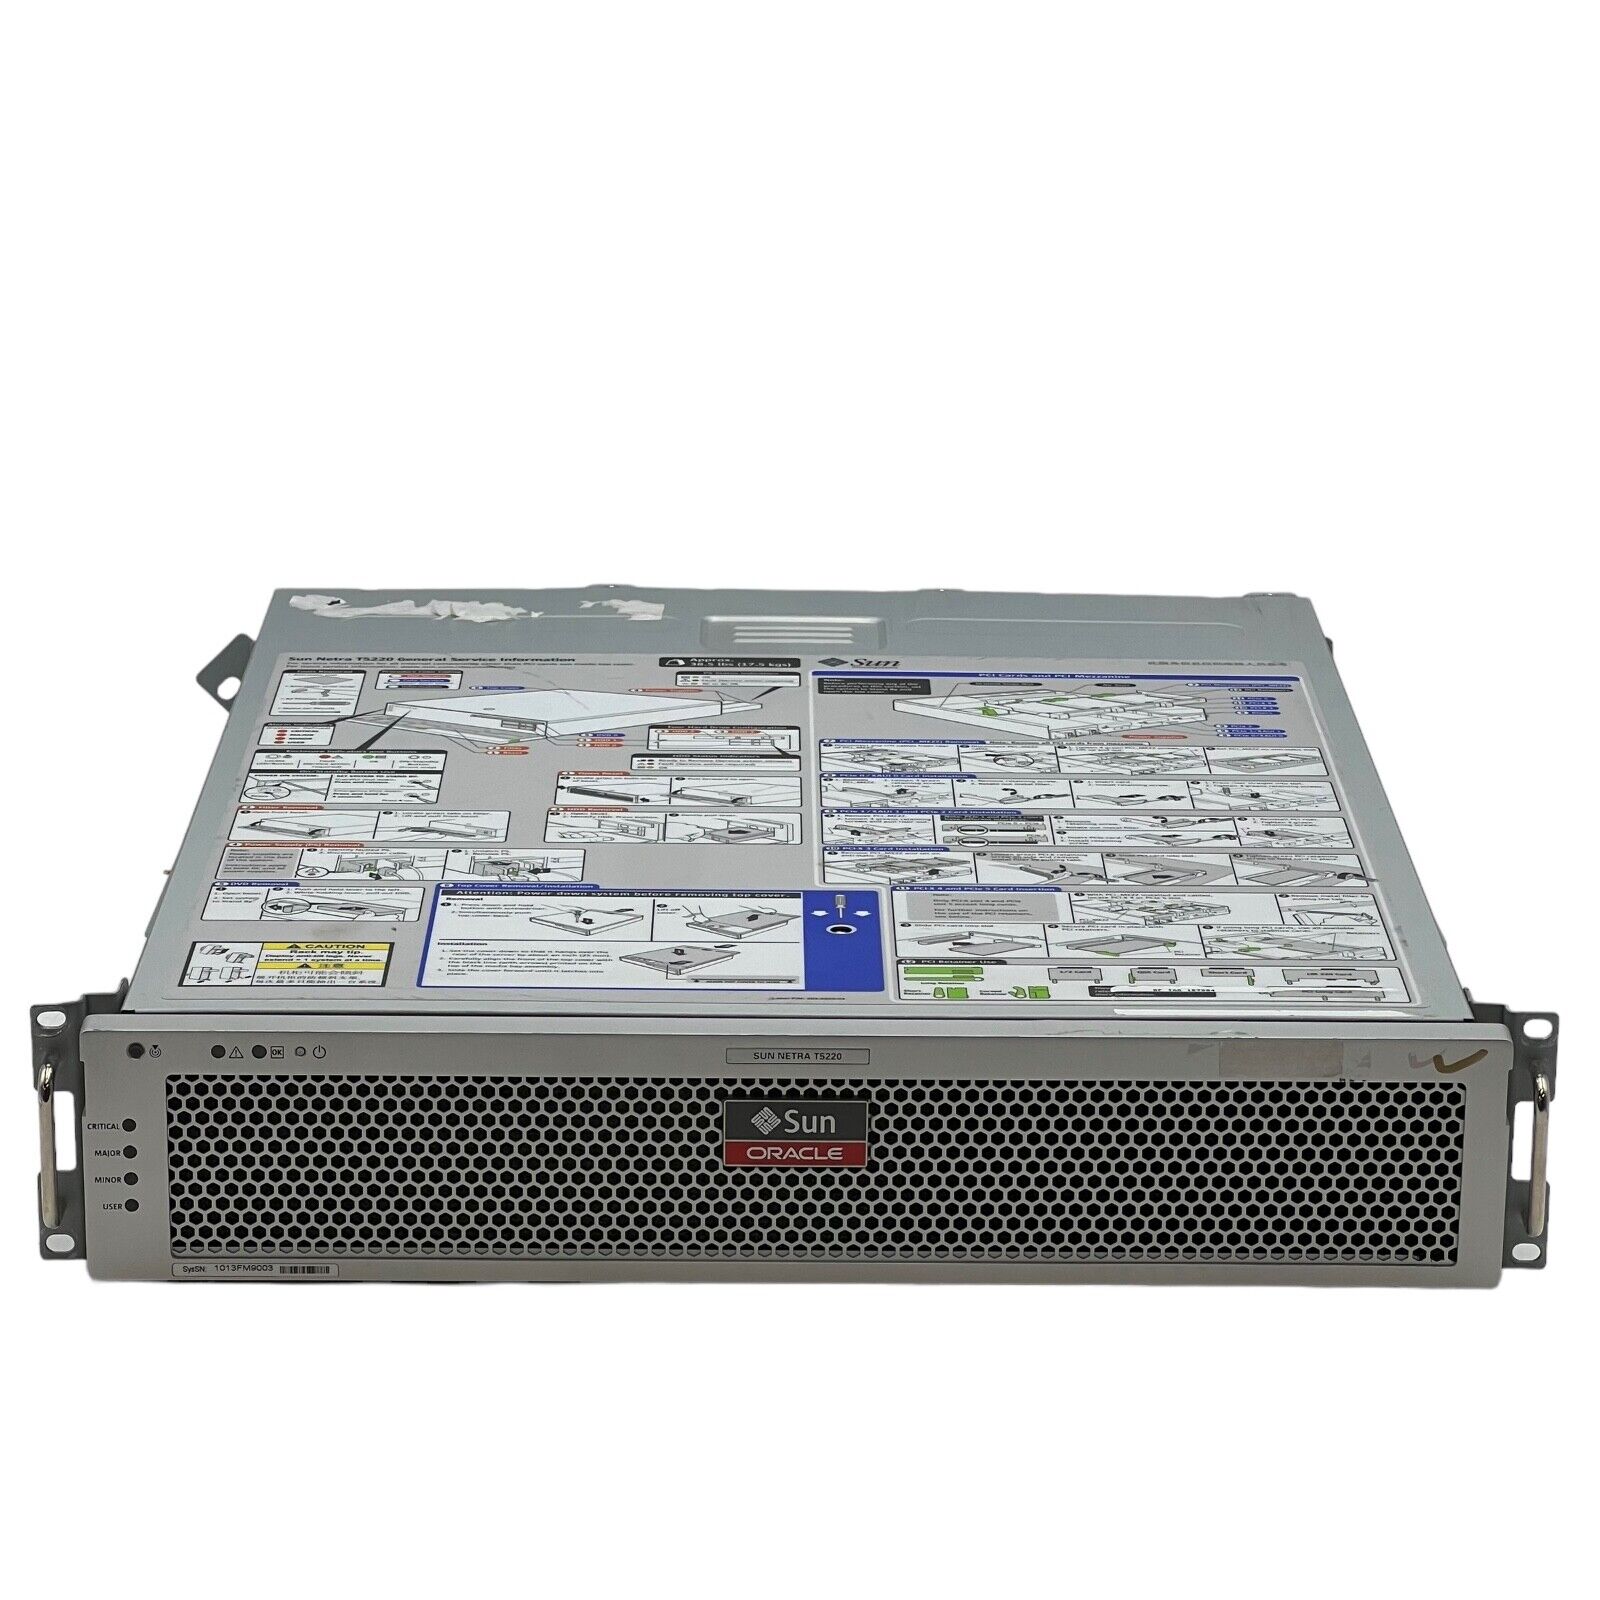 SUN Netra T5220 Rackmount Server